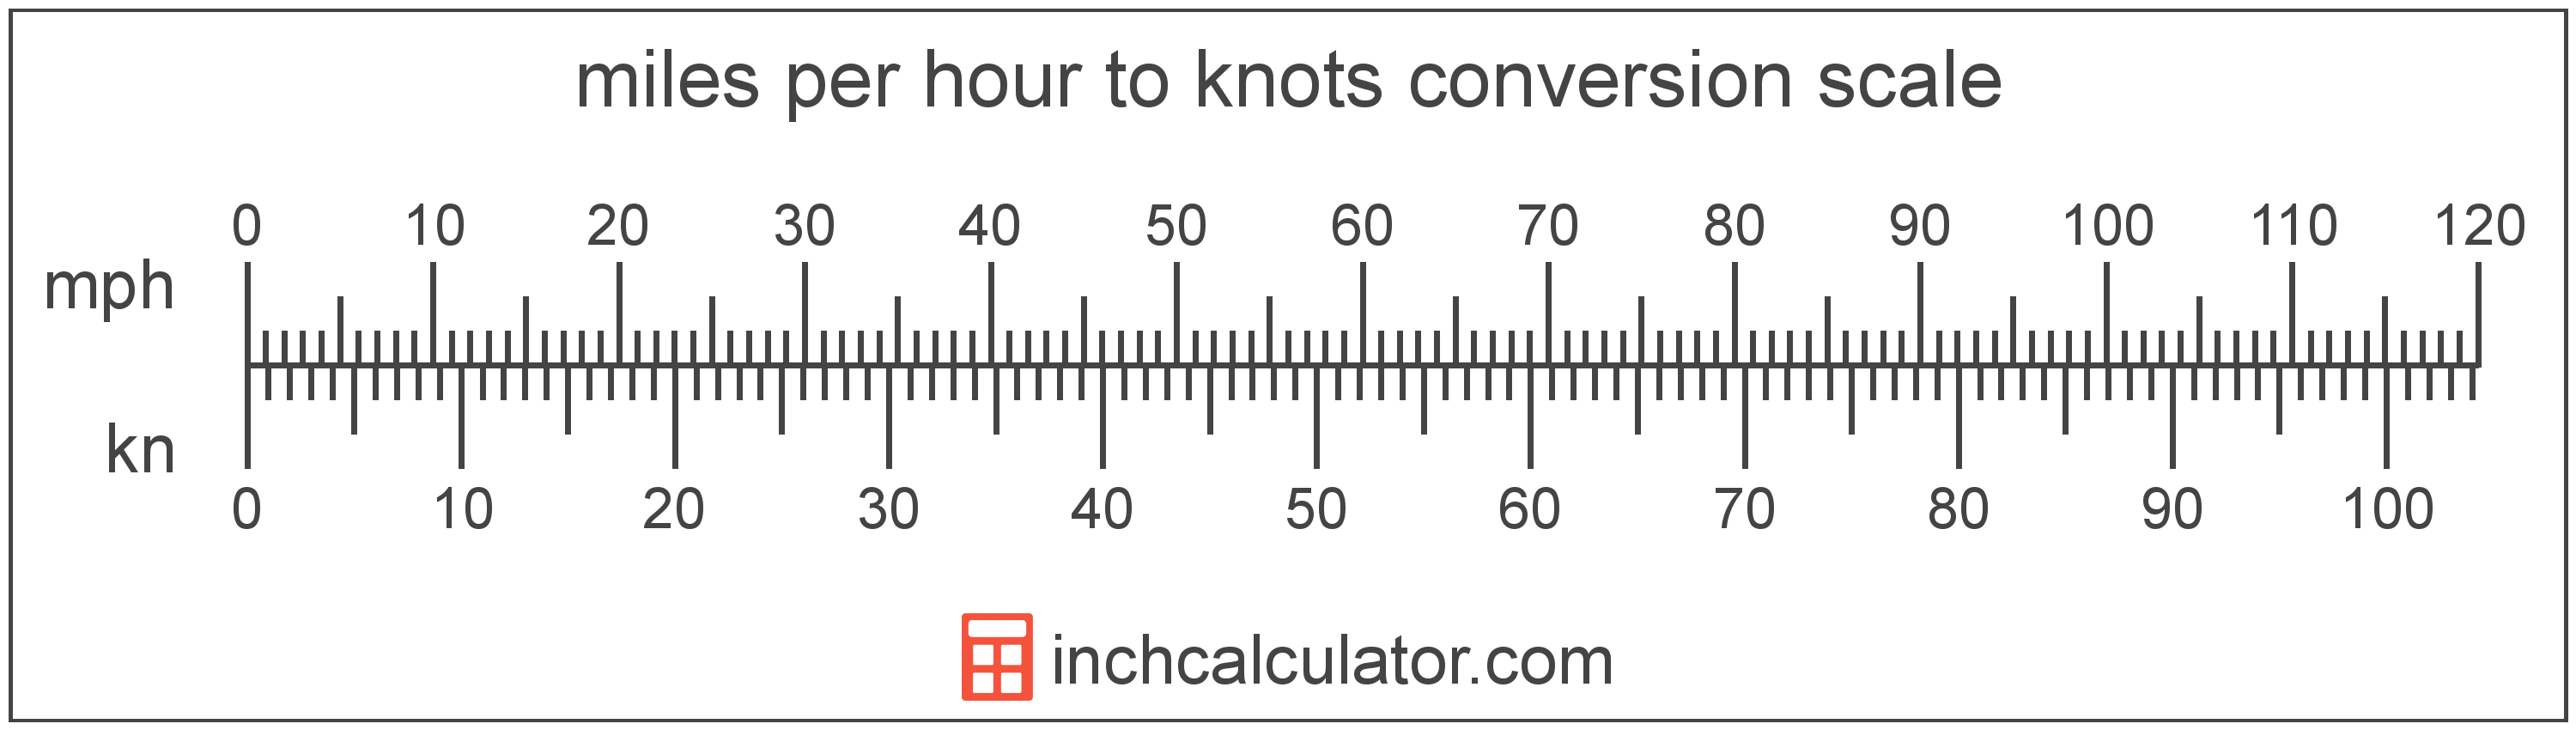 knots-to-miles-per-hour-conversion-kn-to-mph-inch-calculator